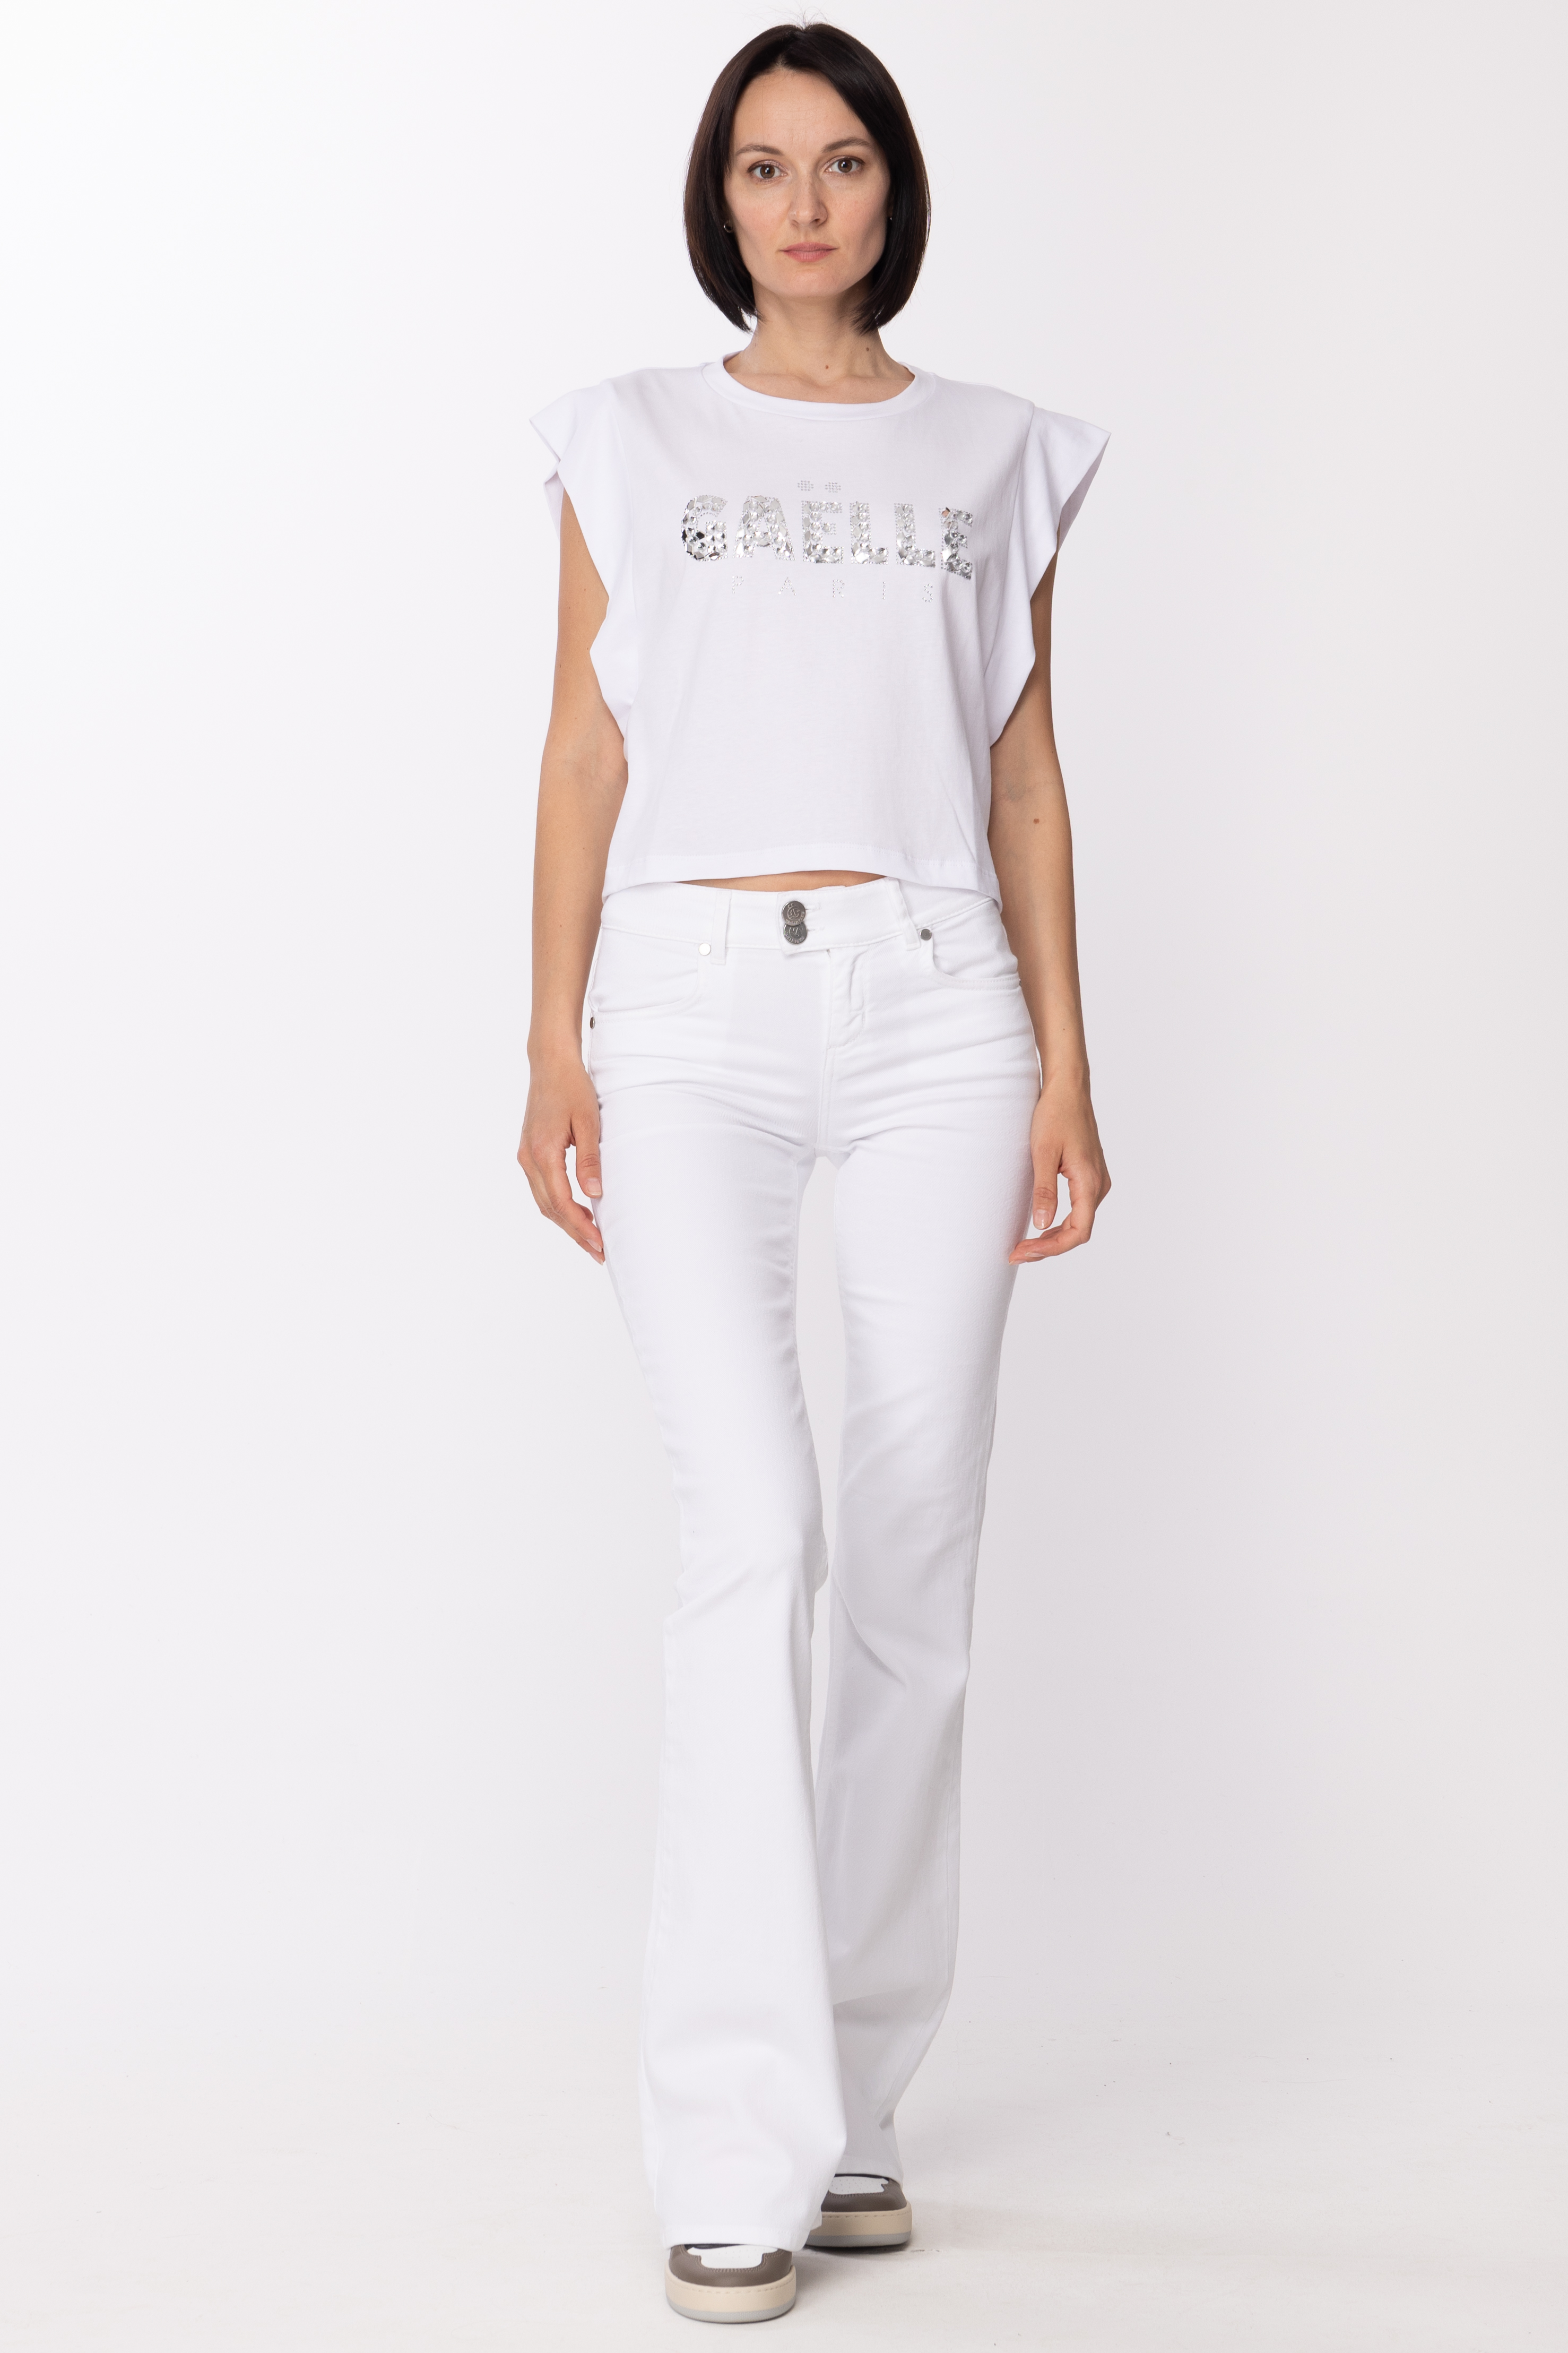 Anteprima: Gaelle Paris T-shirt con logo in strass Bianco